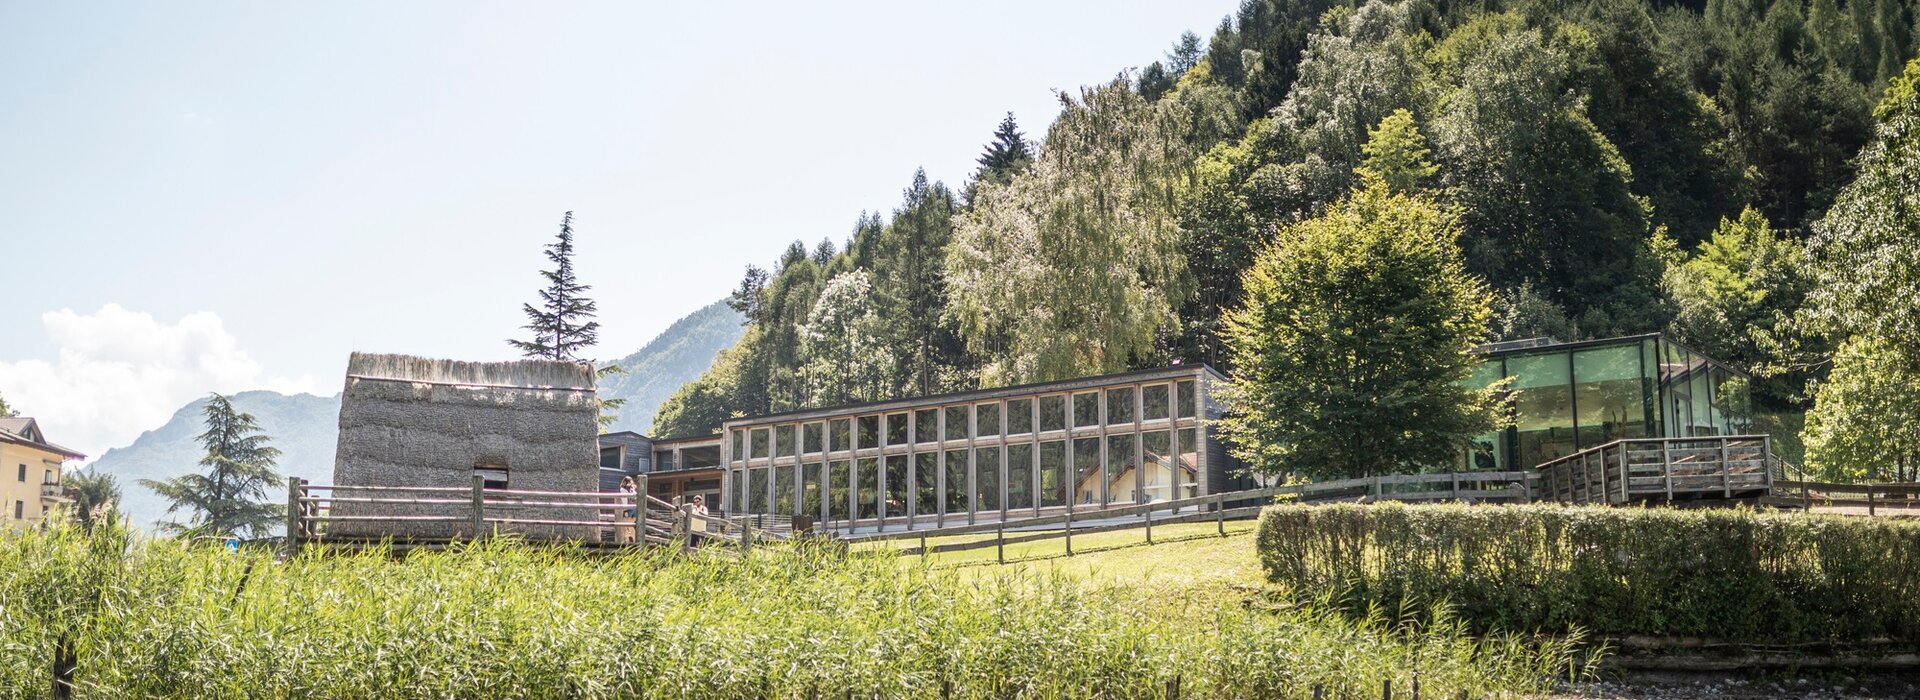 Palafitte Ledro - Garda Trentino